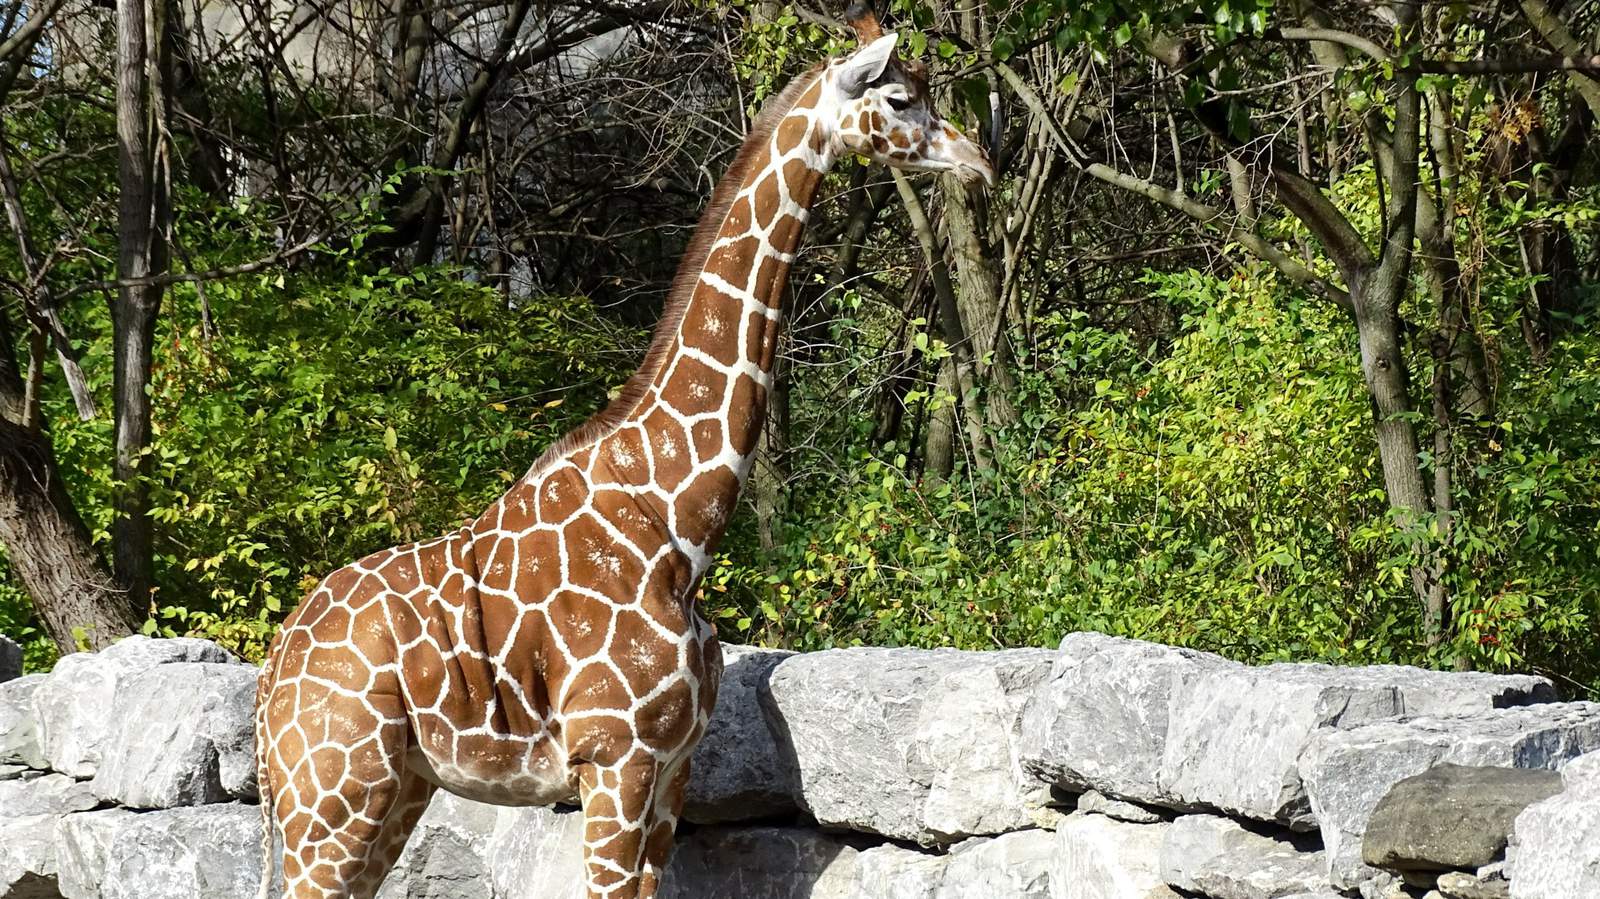 Detroit Zoo welcomes 2-year-old giraffe named Zara to the herd